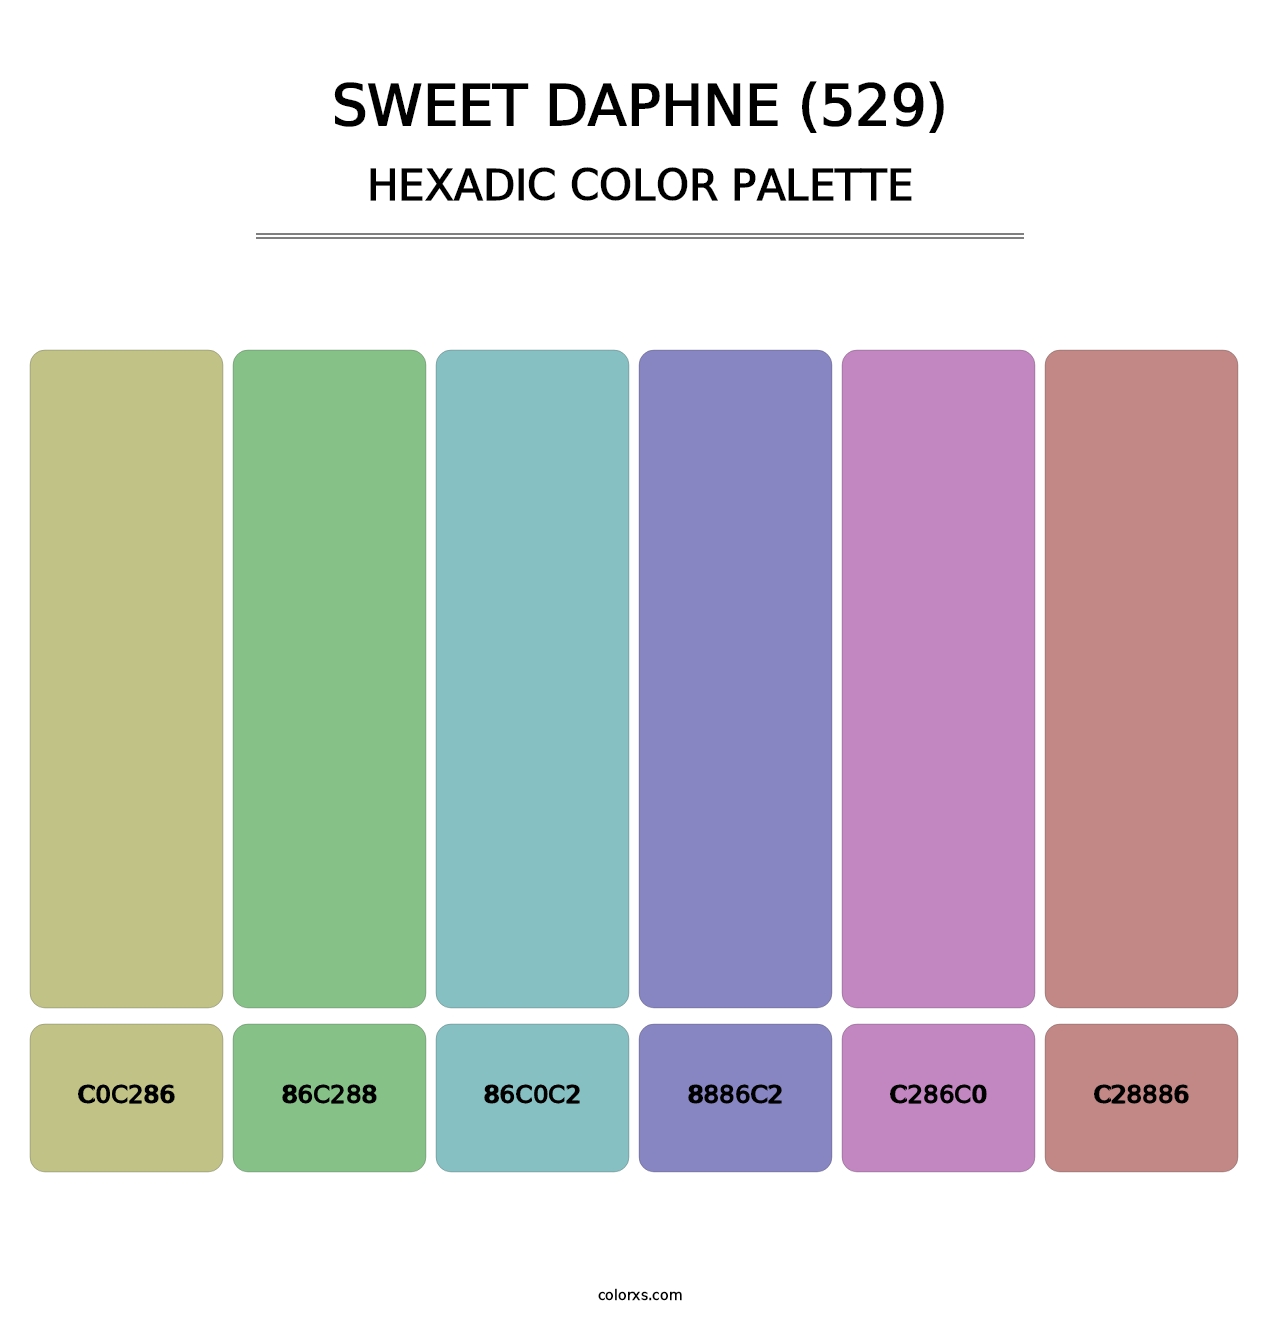 Sweet Daphne (529) - Hexadic Color Palette